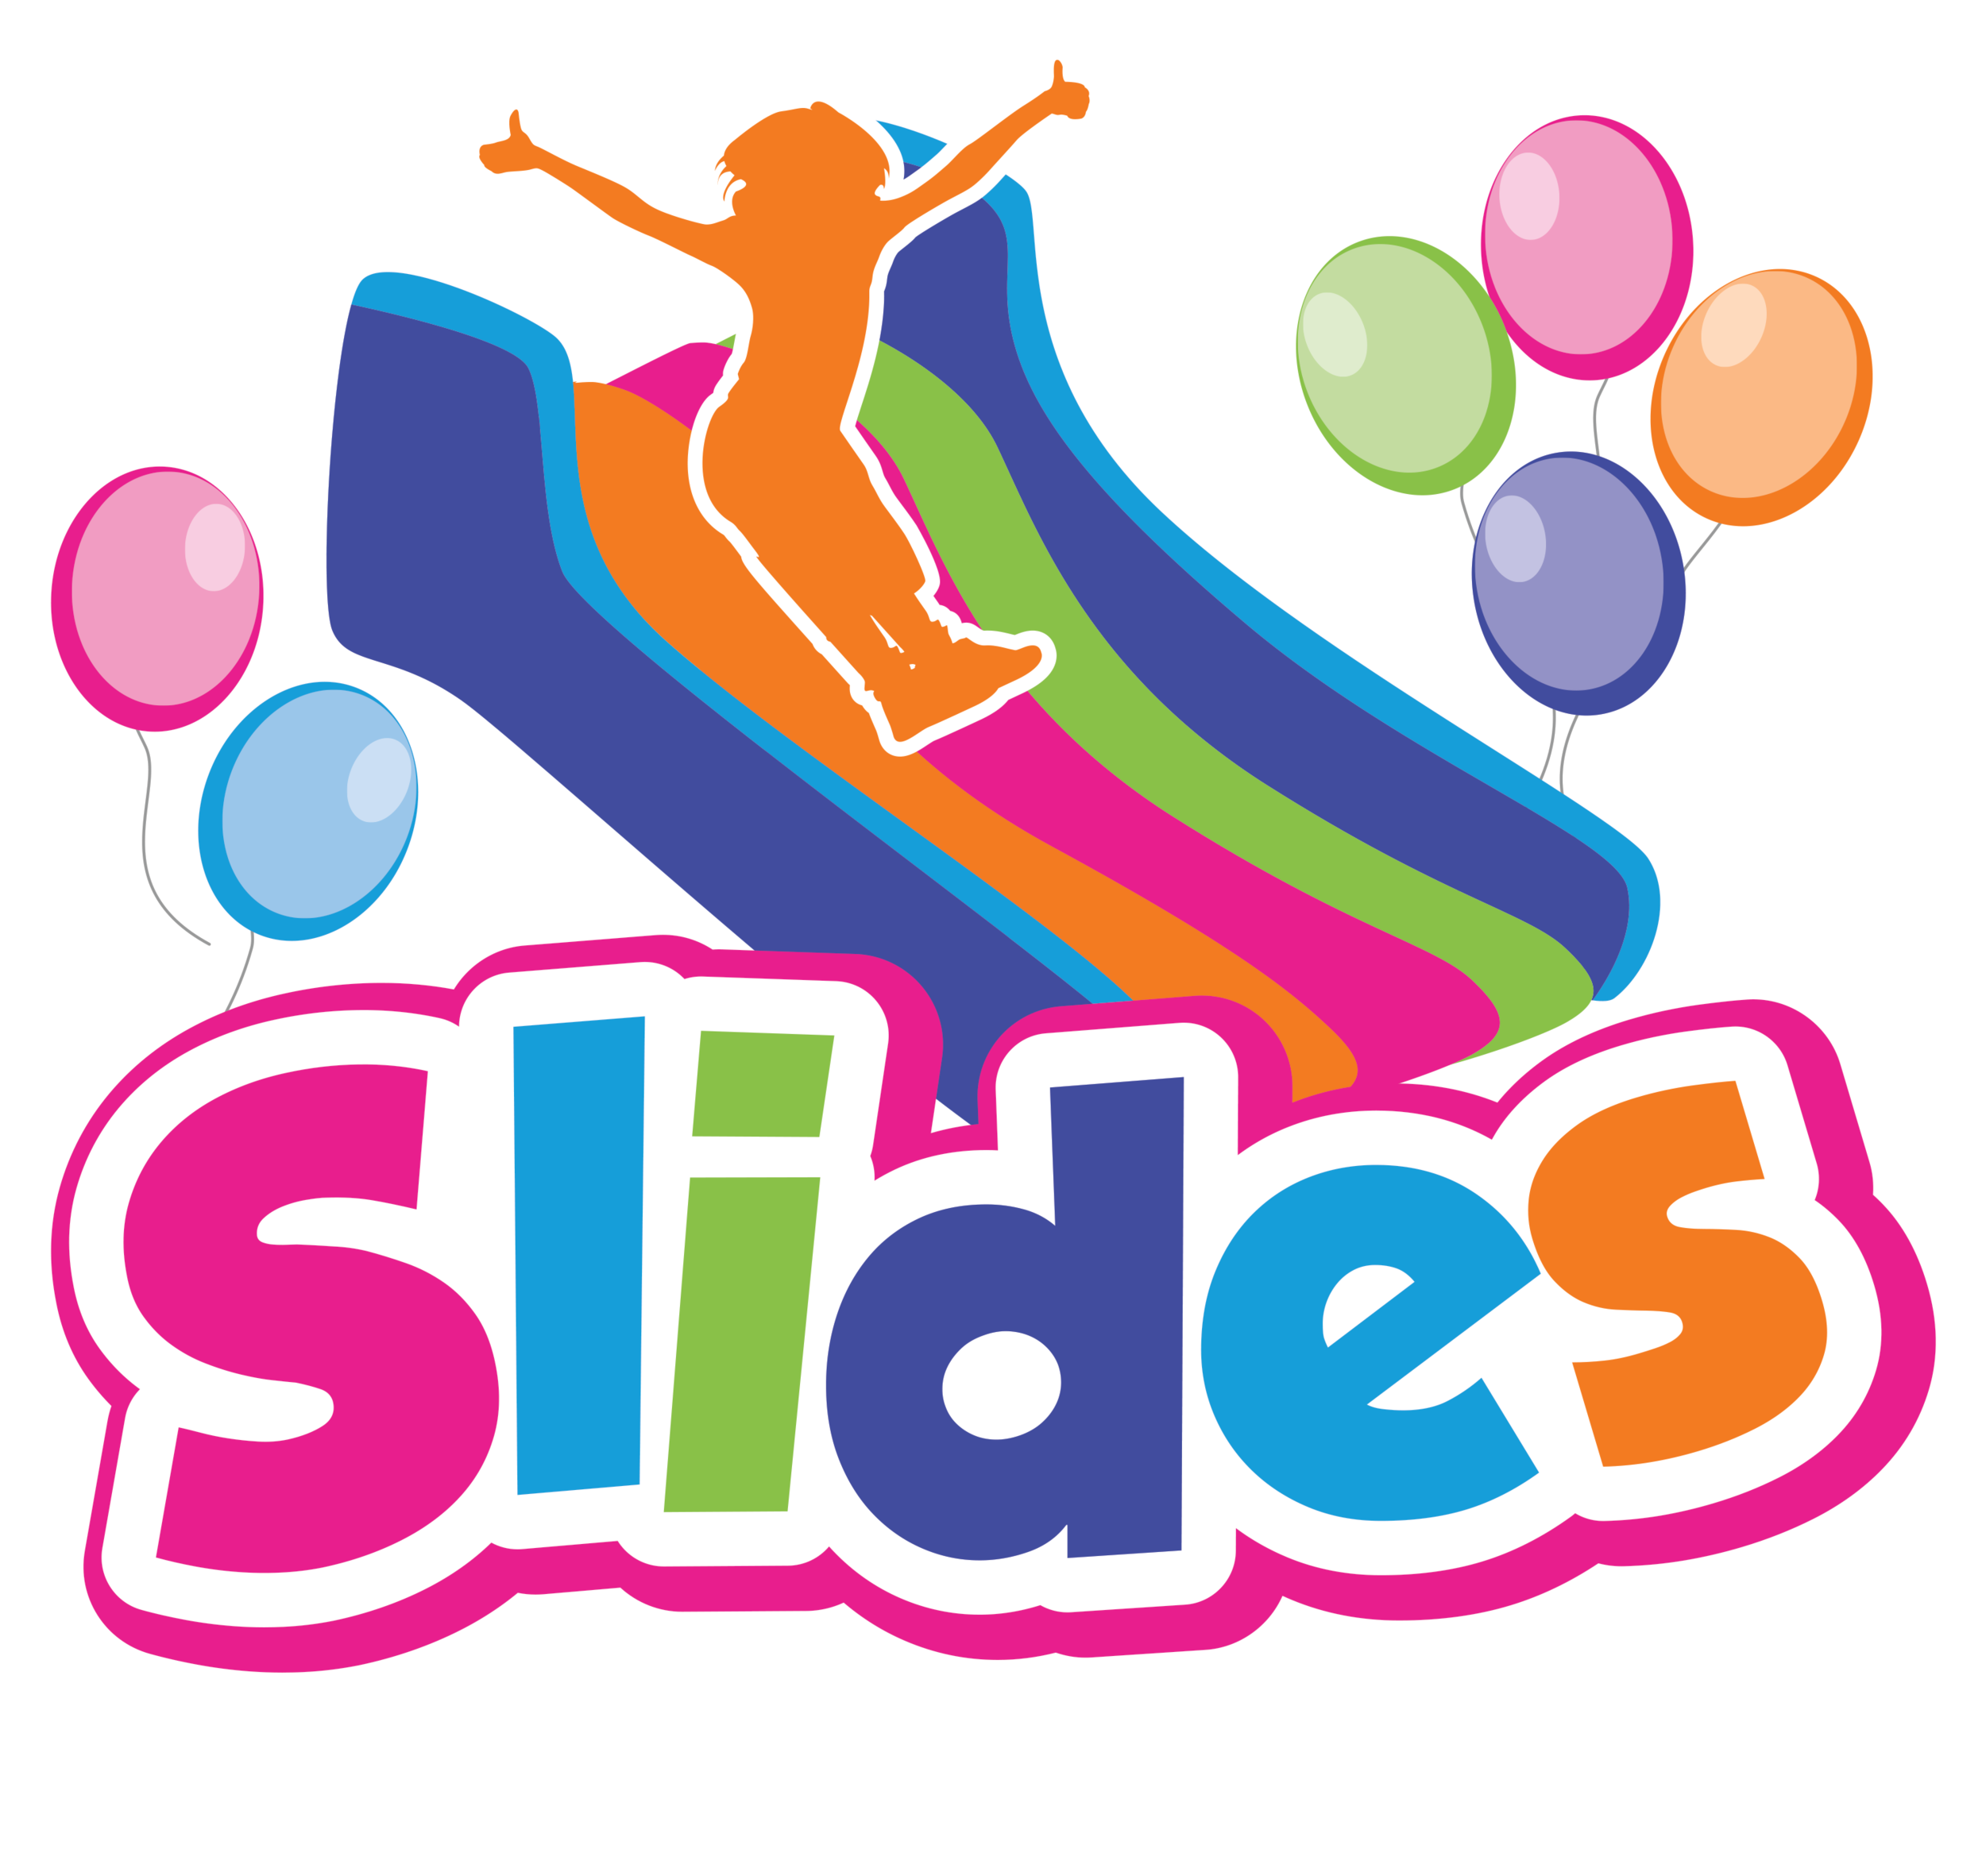 Slides Playcentre &amp; Cafe - Knoxfield